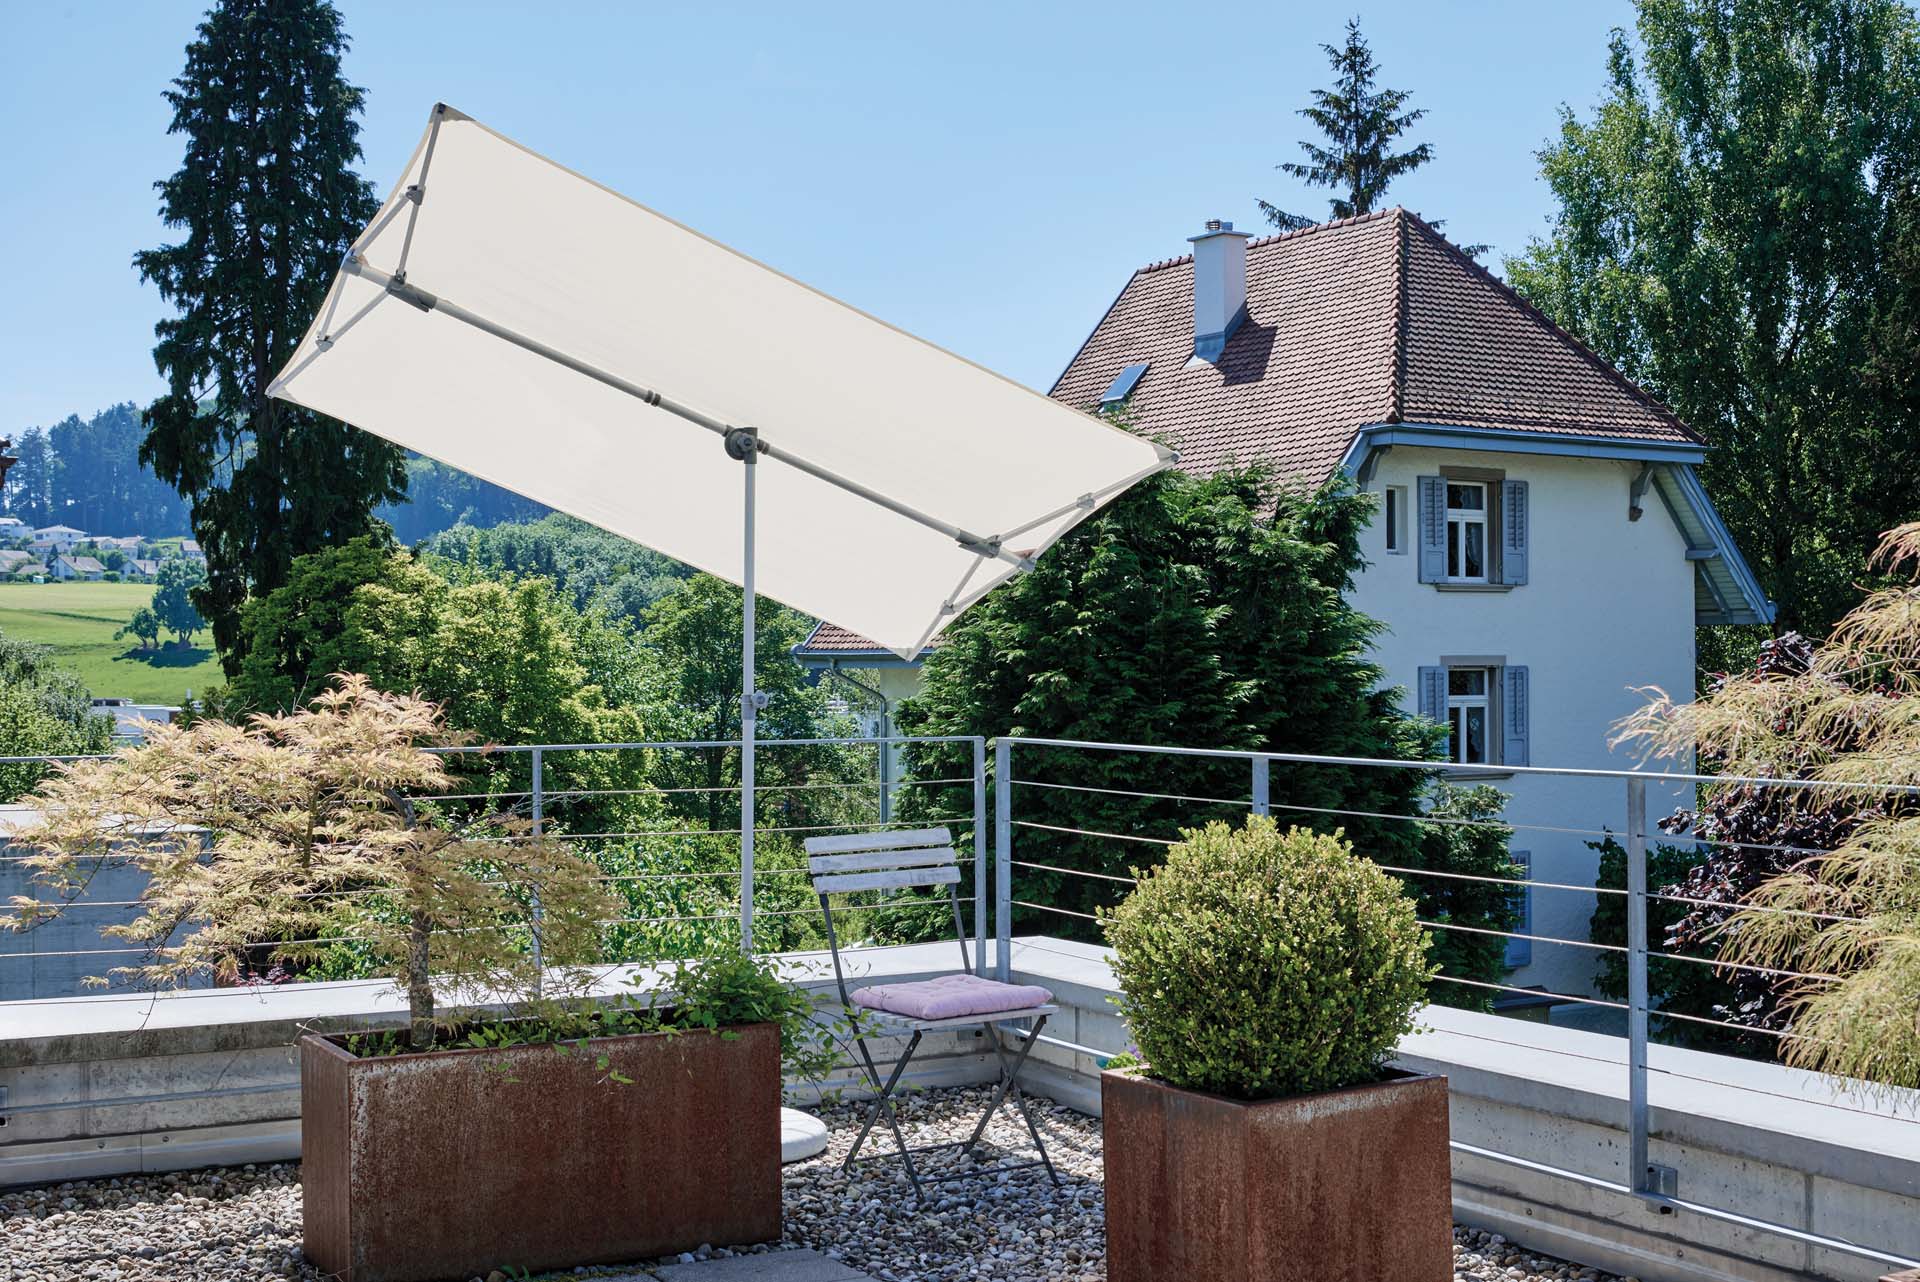 Flex Roof Sun Comfort, 210 x 150 cm, 057 stone grey